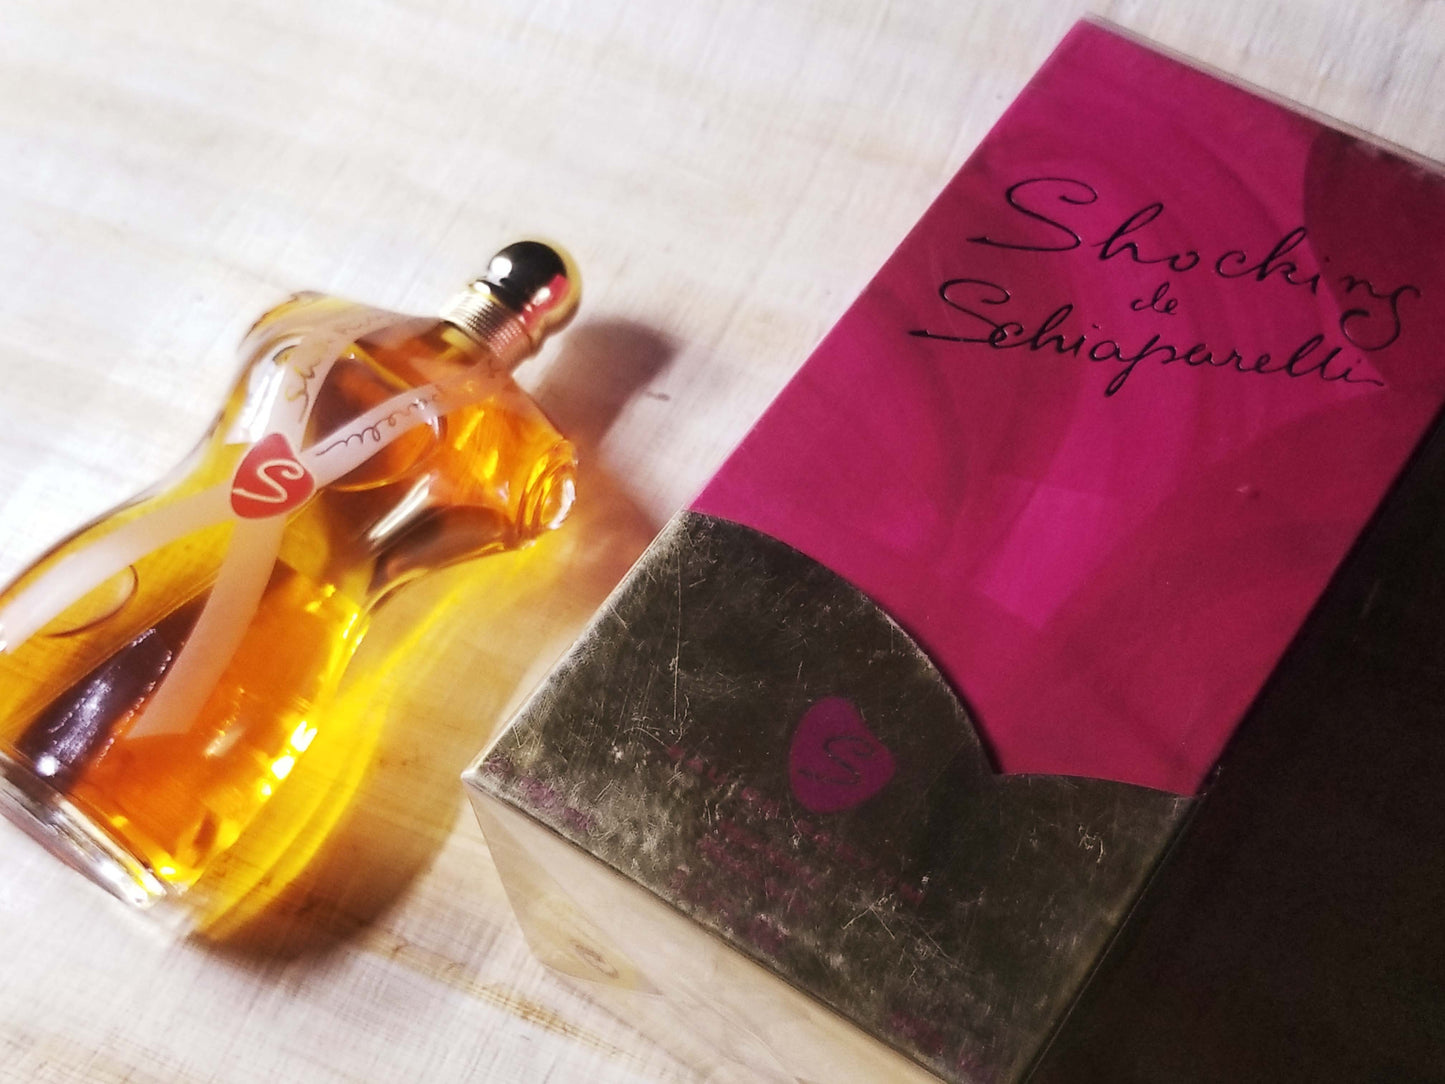 Shocking by Schiaparelli EDP Spray NIB 100 ml 3.4 oz OR 50 ml 1.7 oz, Vintage